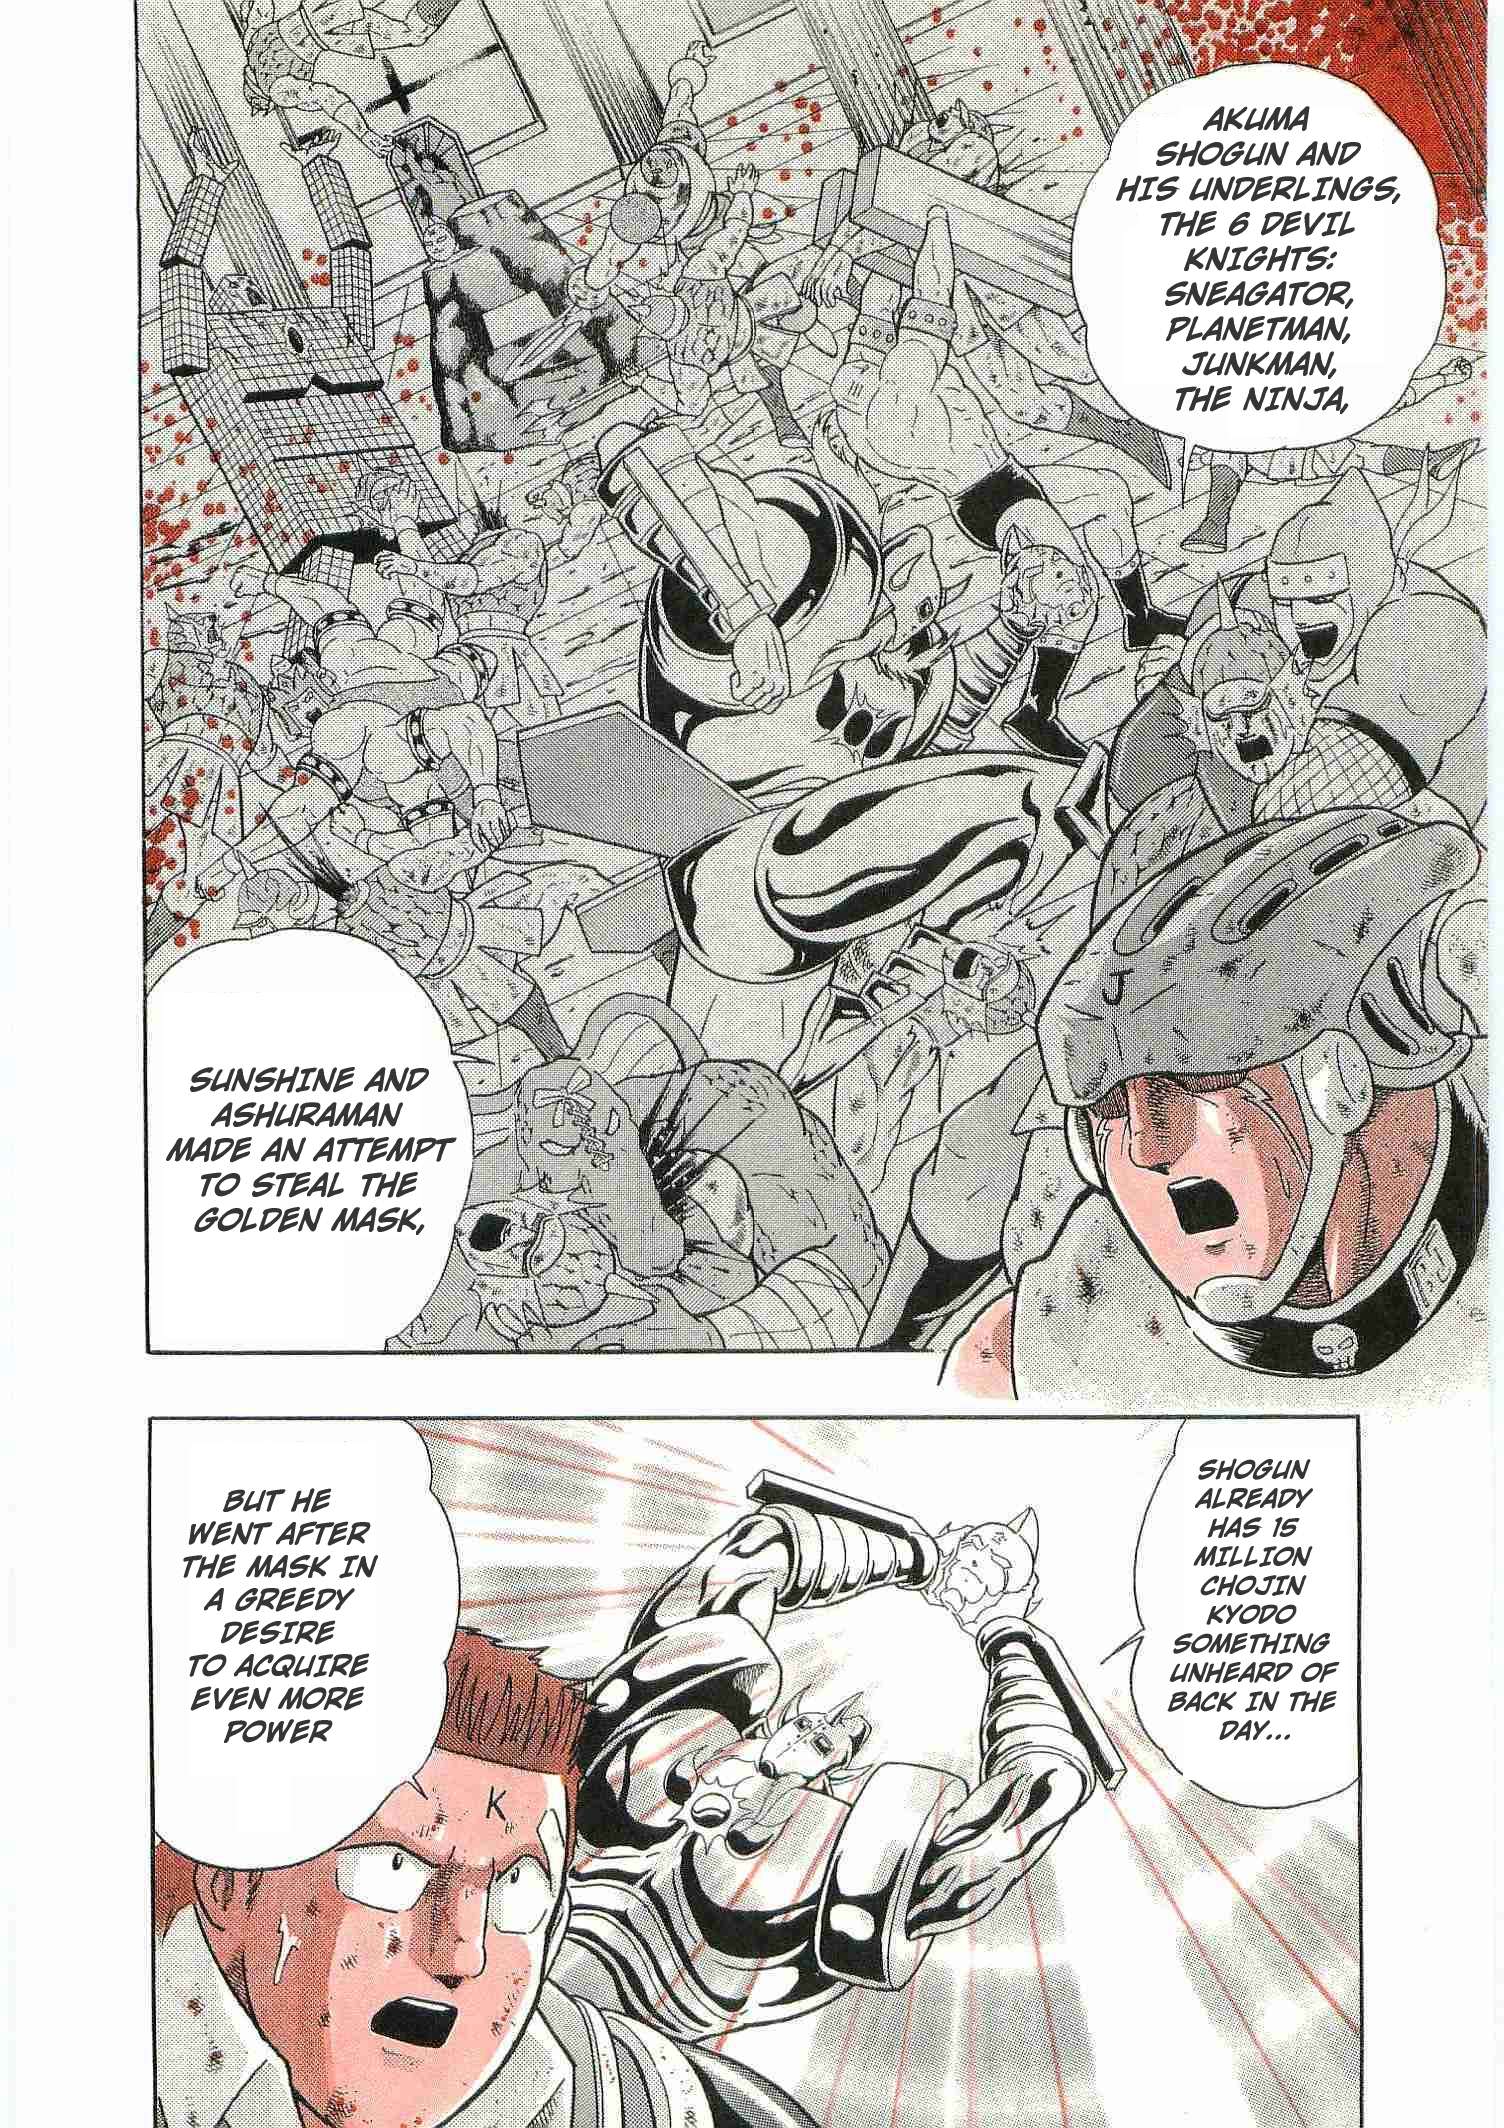 Kinnikuman II Sei - 2nd Generation - chapter 292 - #6